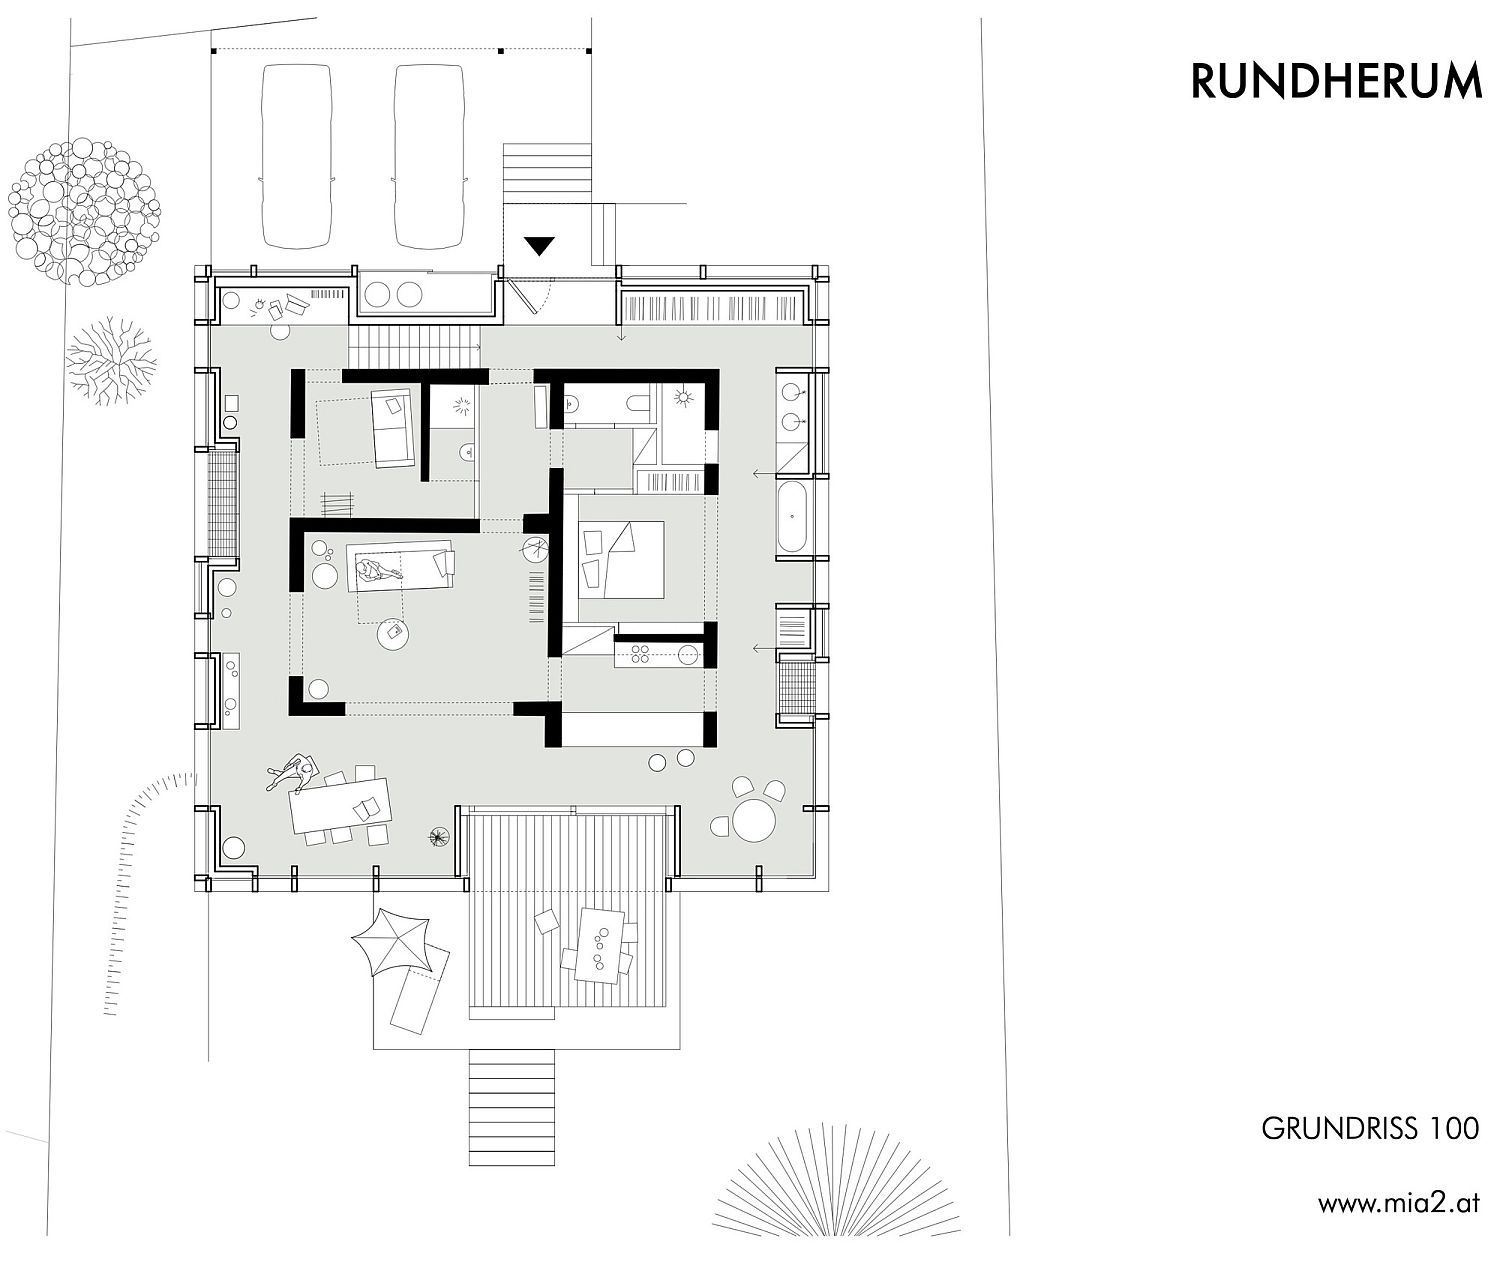 Rundherum-home-floor-plan-with-revamped-interior